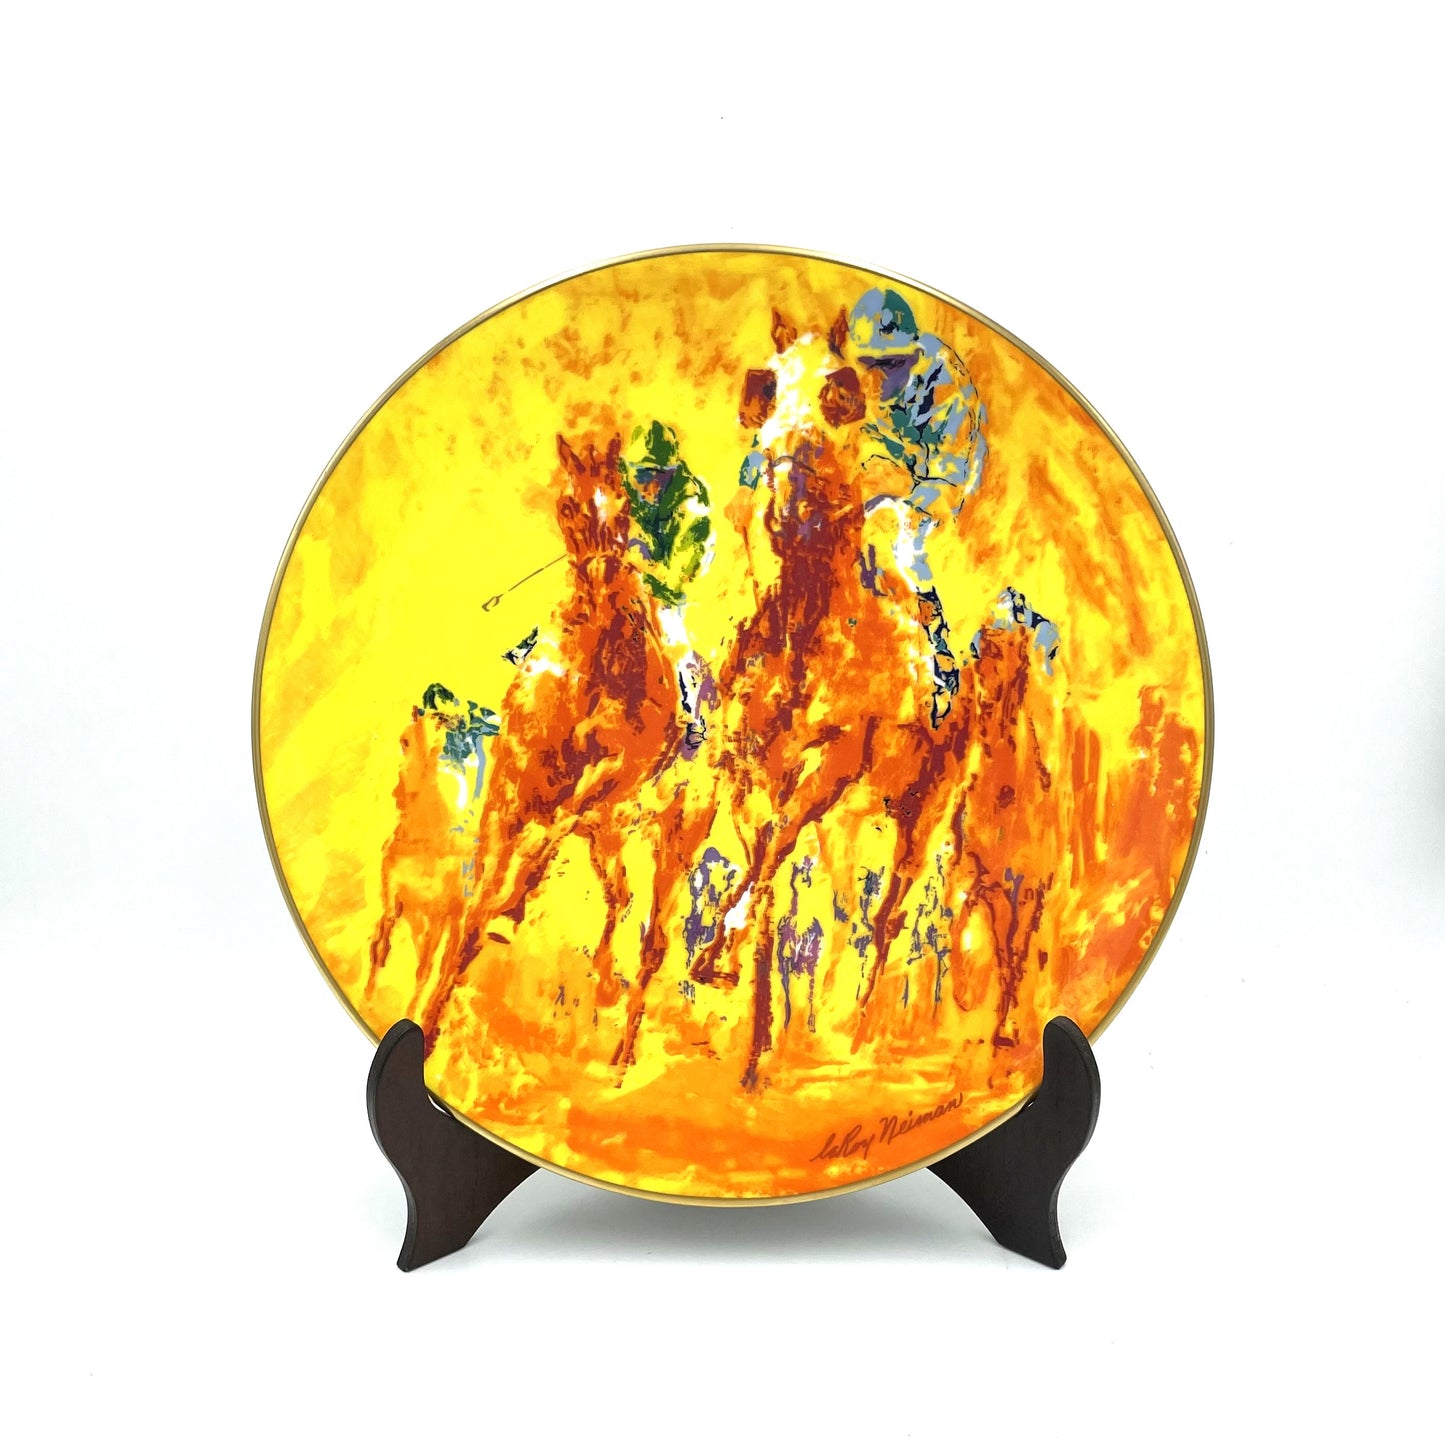 Royal Doulton Collectors International LeRoy Neiman 'Winning Colors' Plate - 27cm